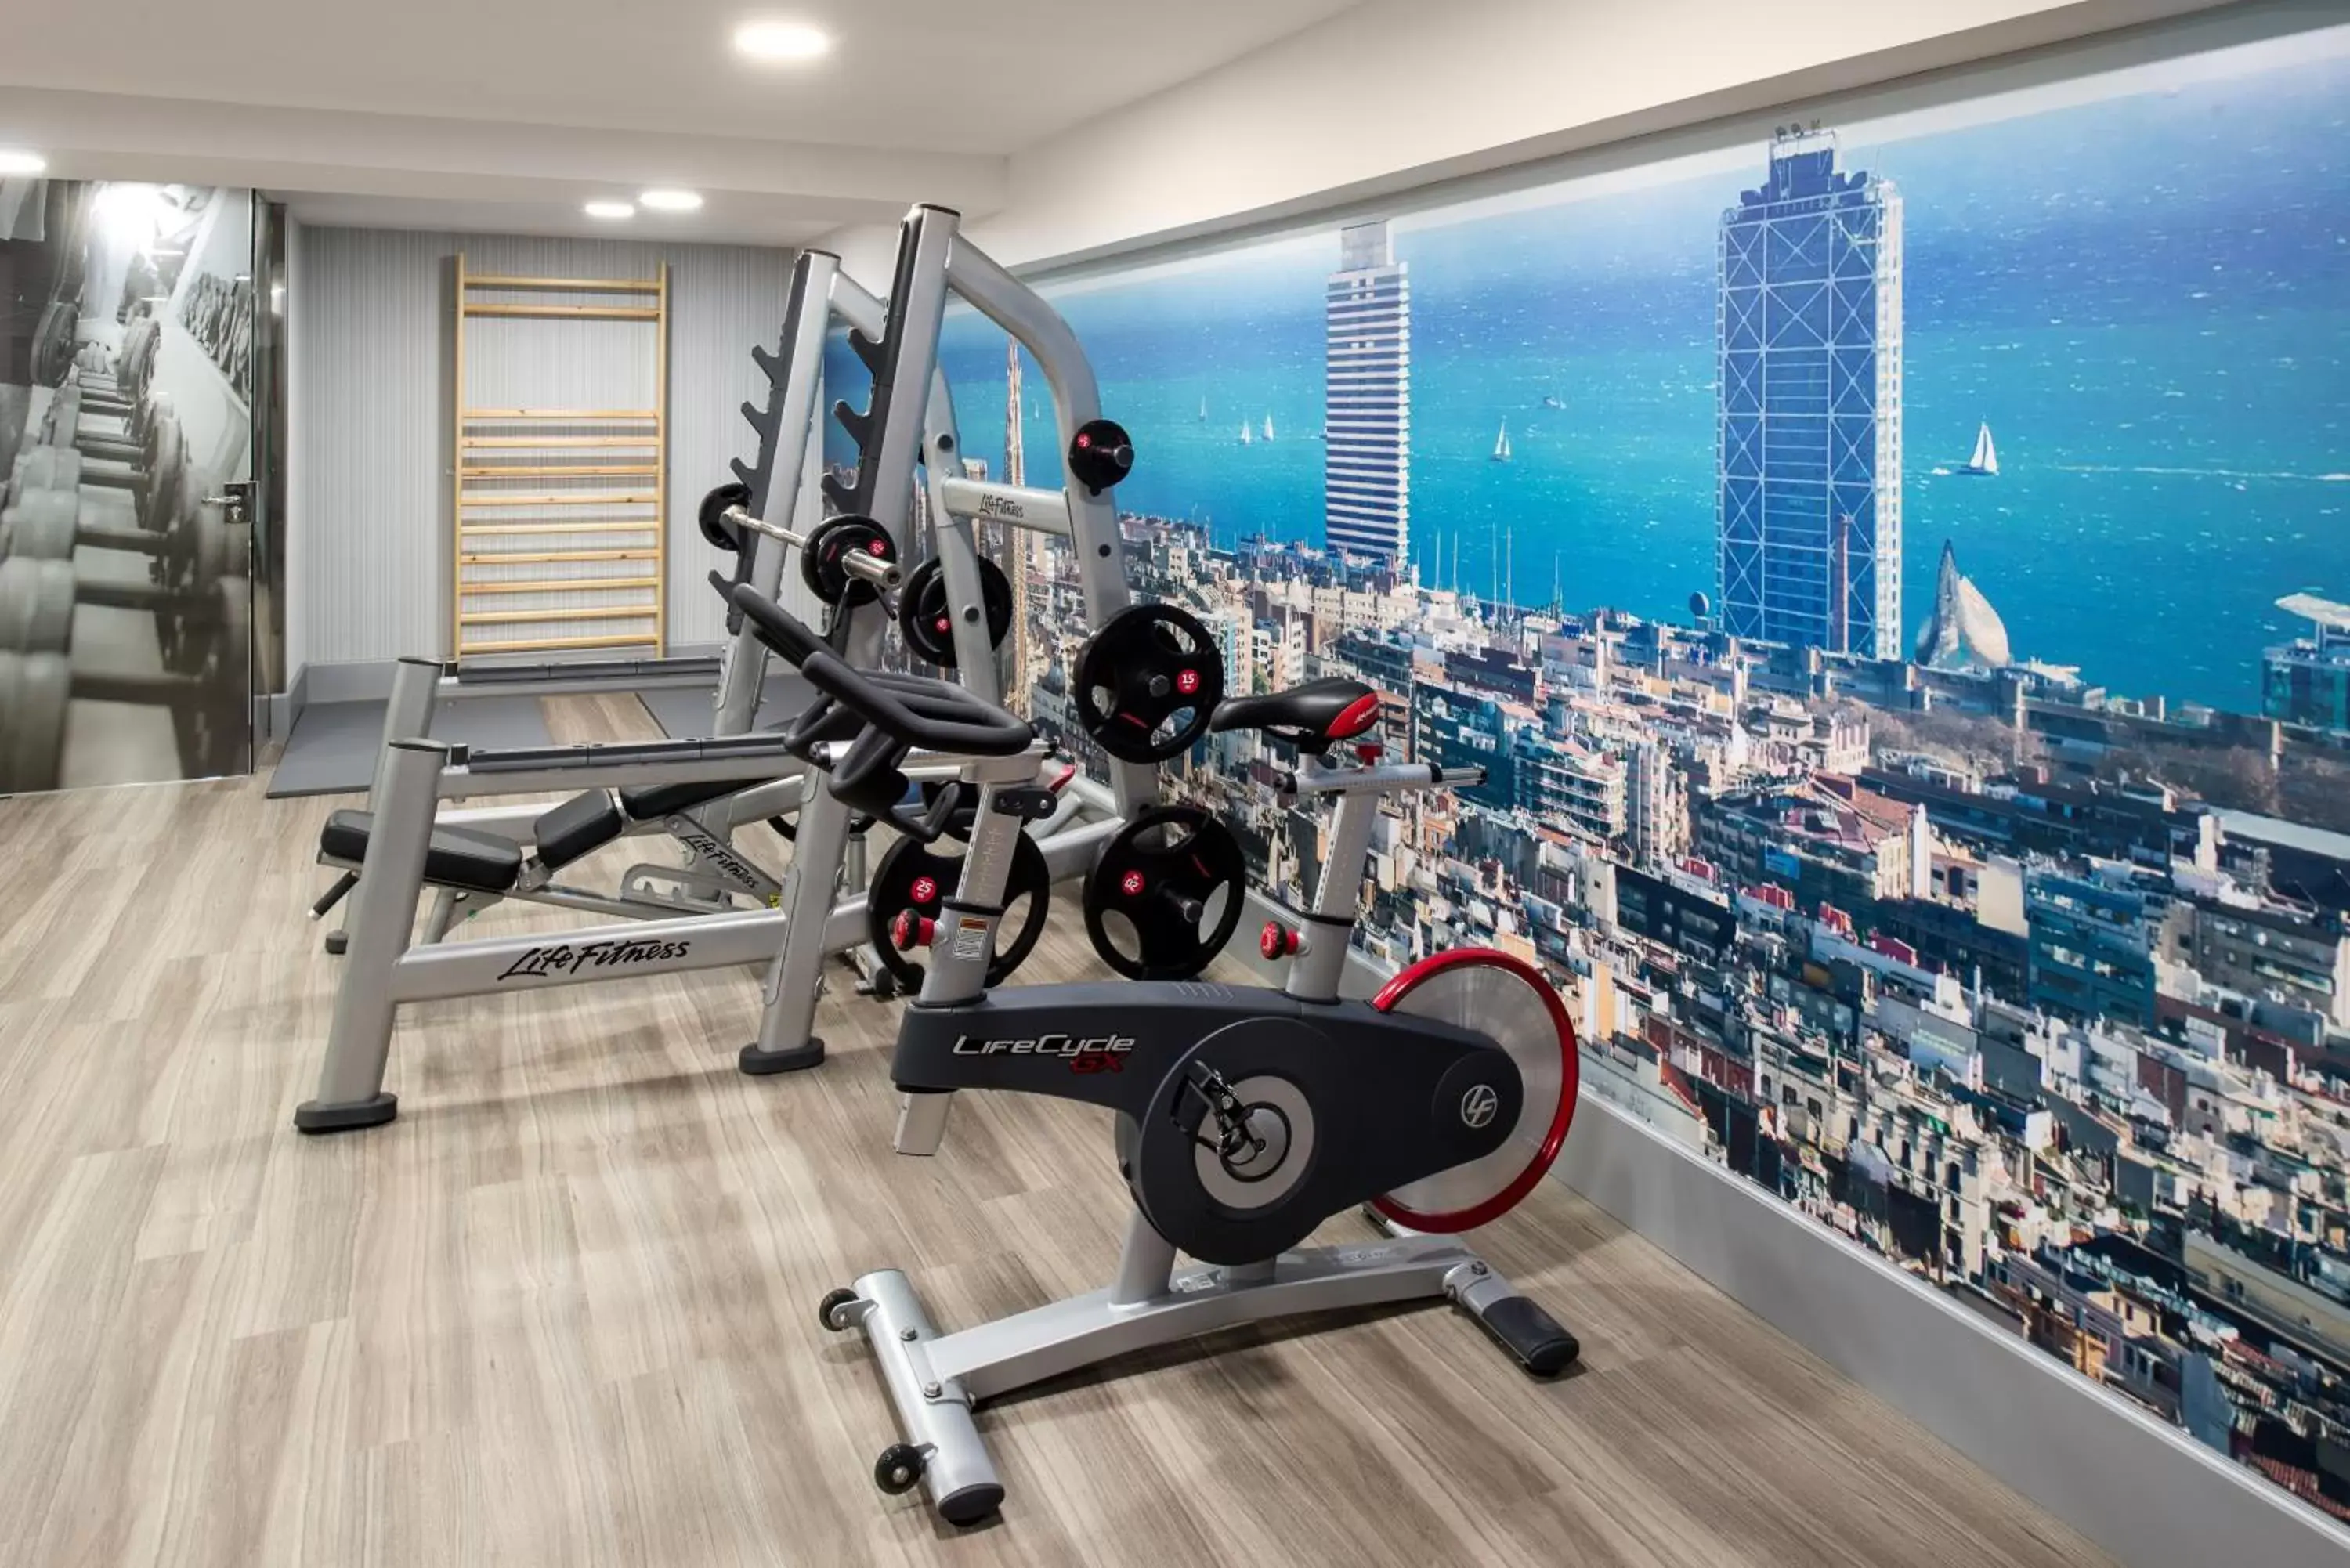 Fitness centre/facilities, Fitness Center/Facilities in Catalonia Sagrada Familia